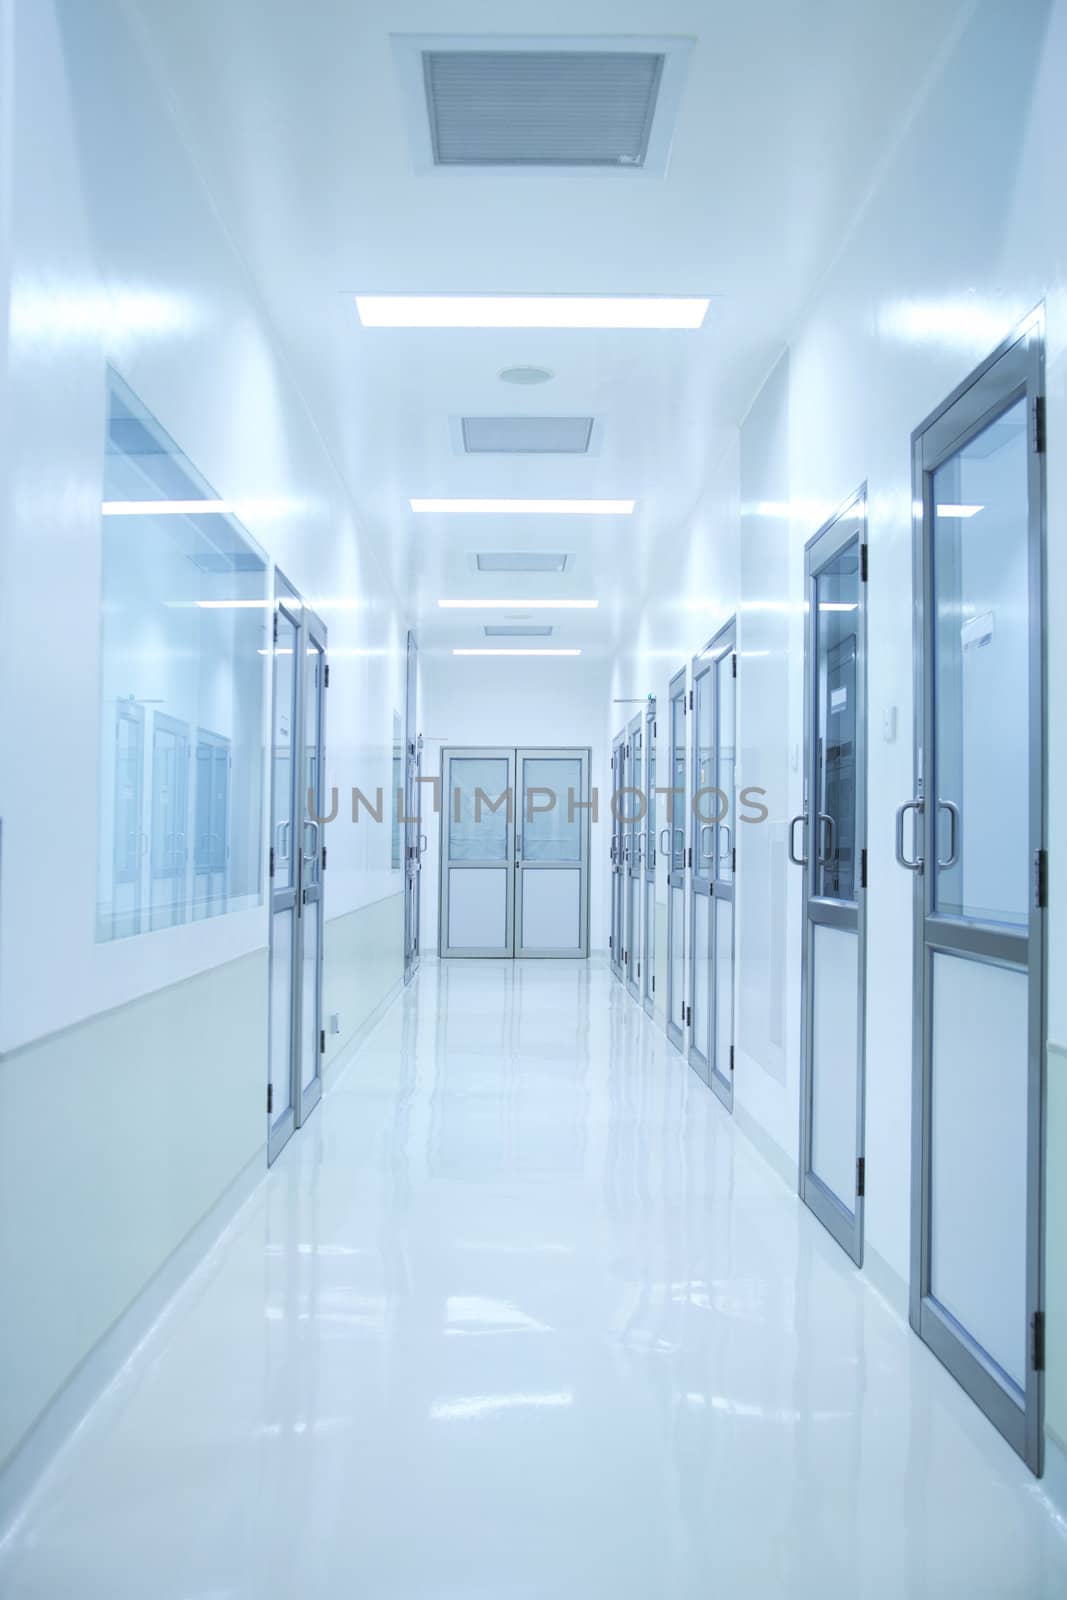 Laboratory corridor by photosoup